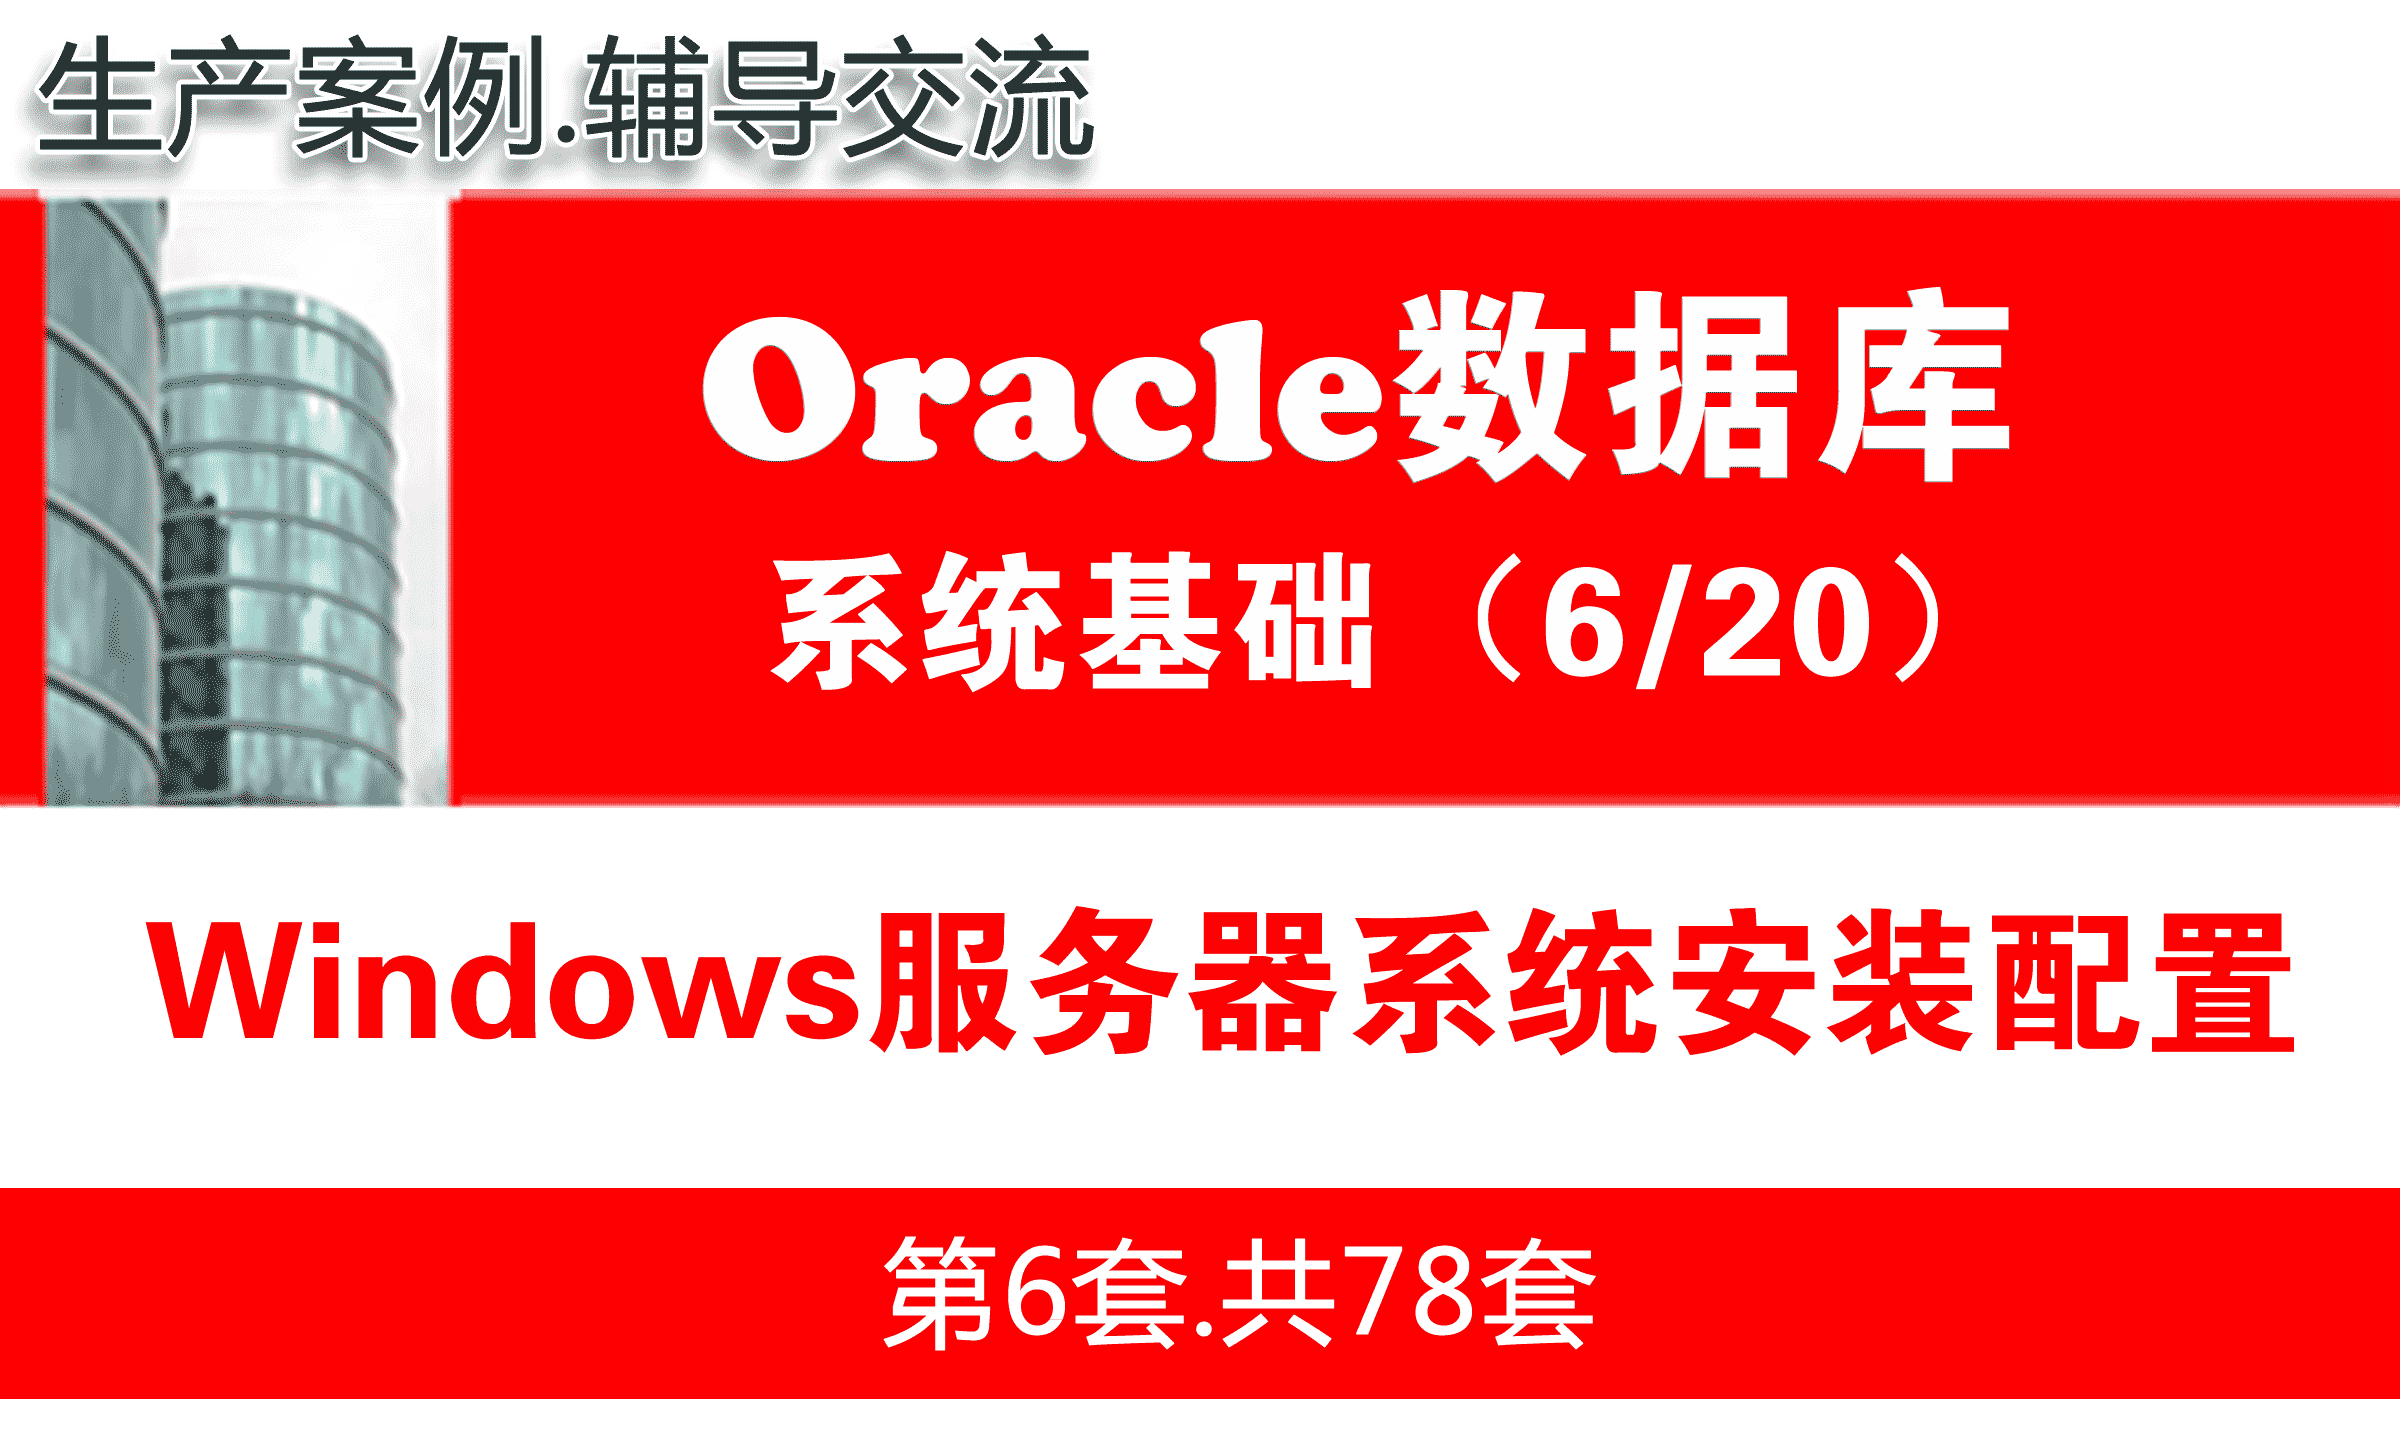 Windows服务器系统安装配置_Oracle数据库入门系列教程06